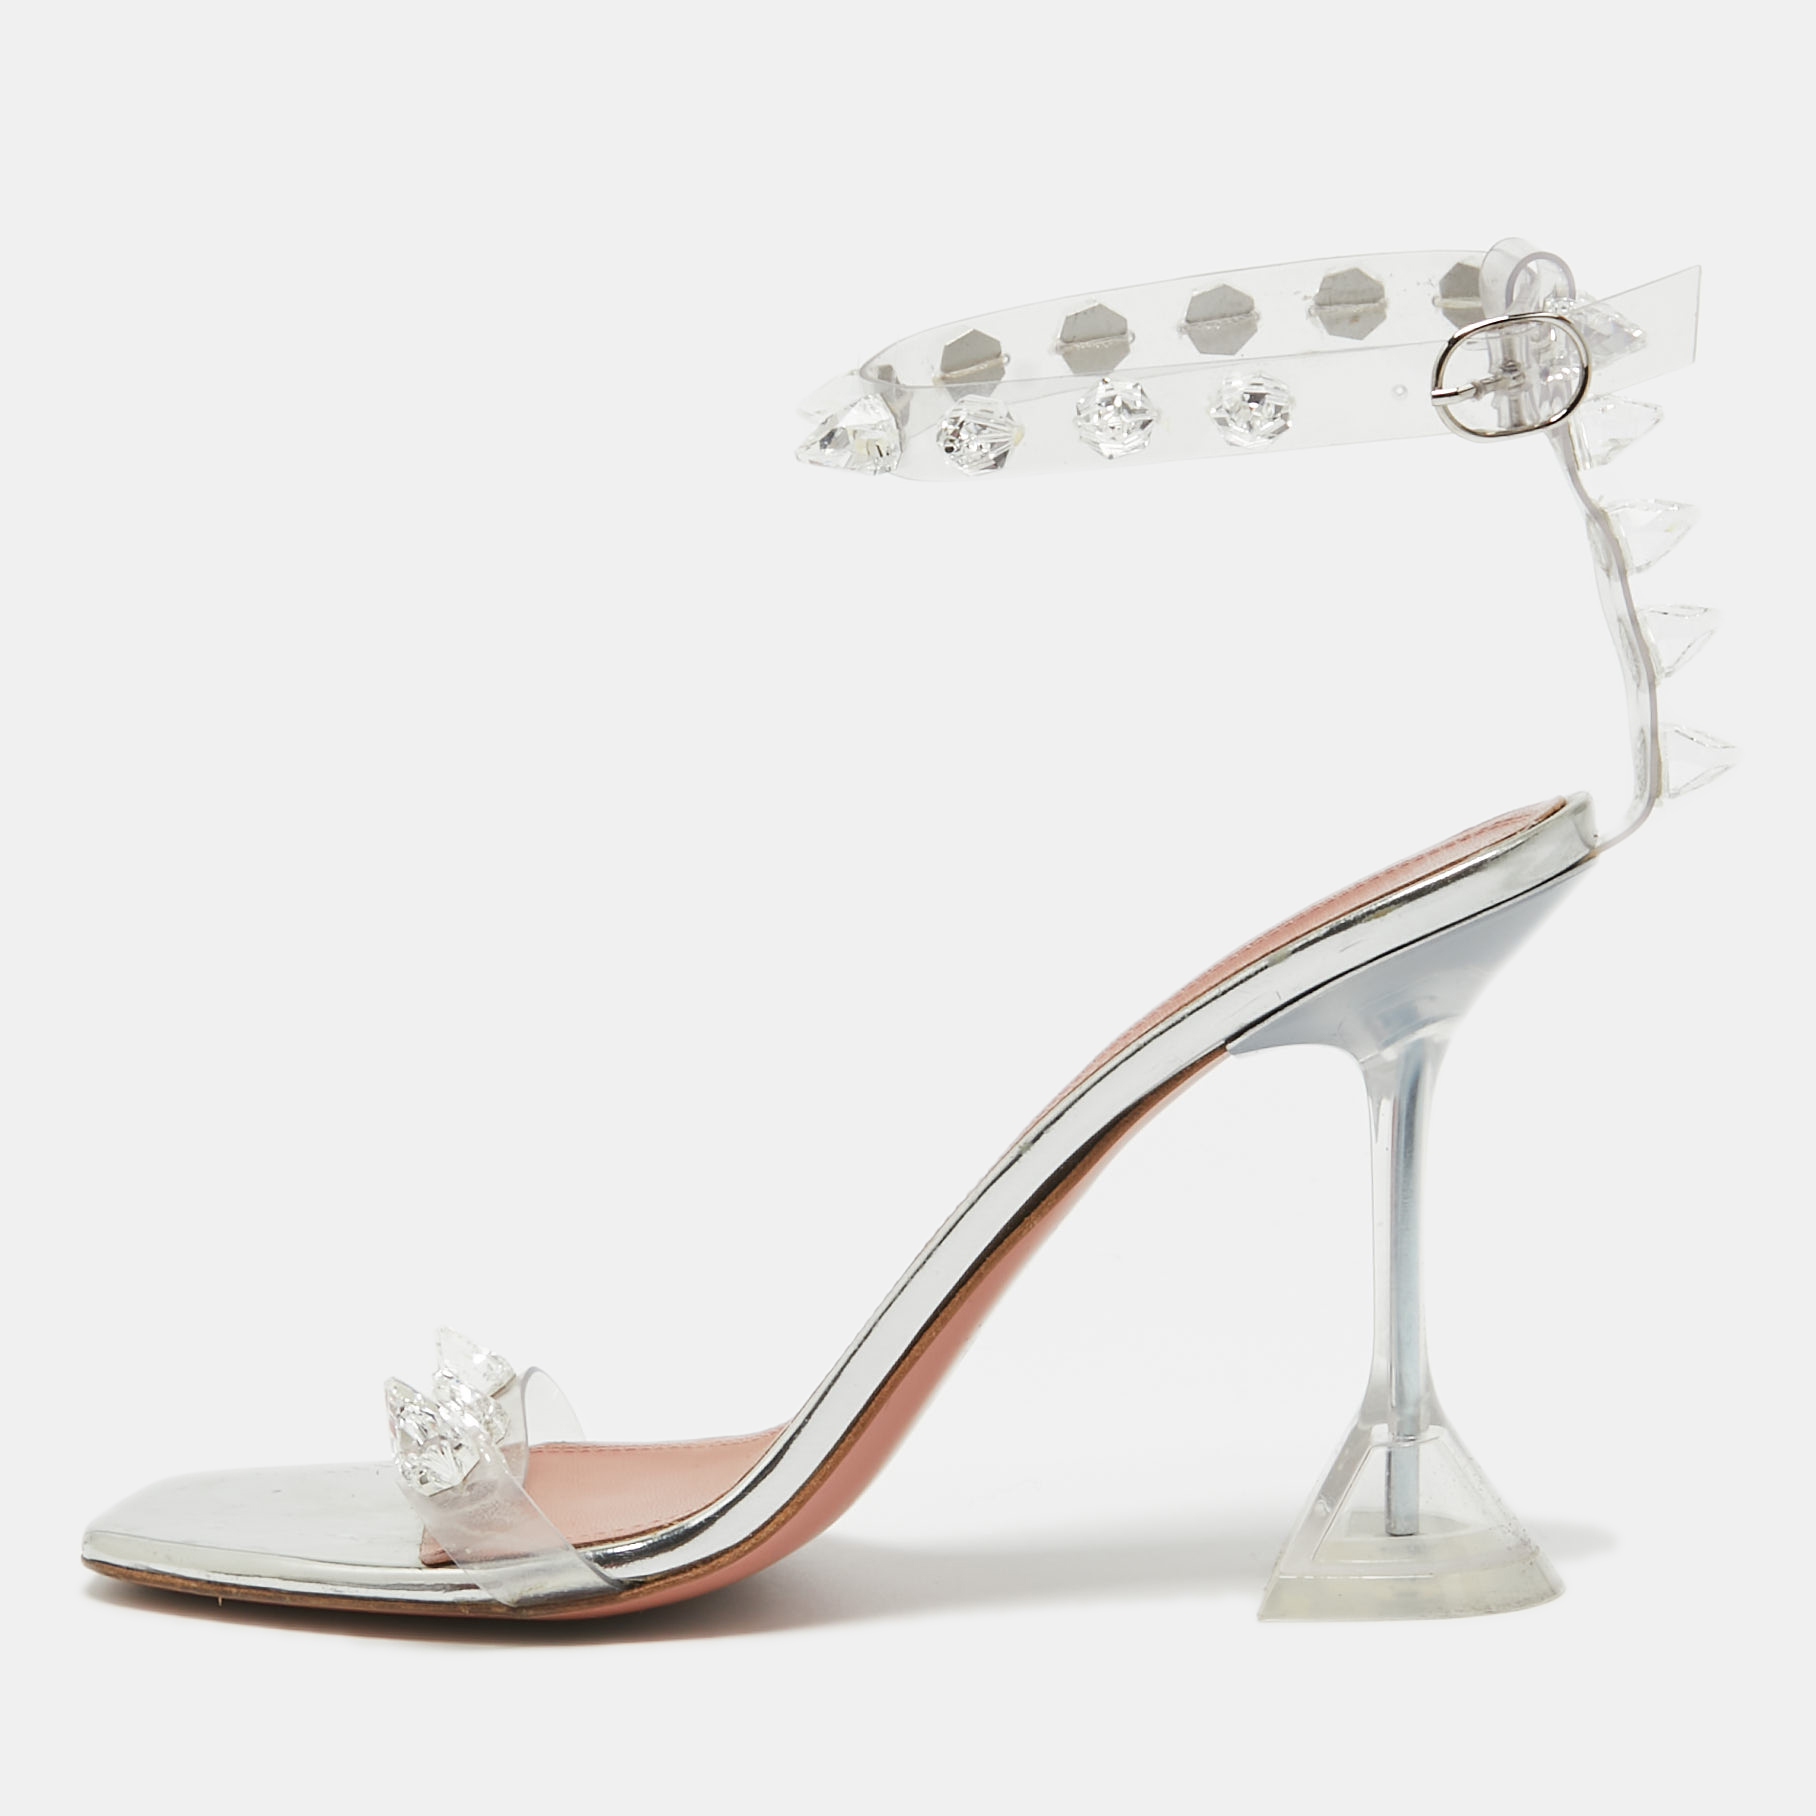 Amina muaddi silver pvc and patent leather julia glass sandals size 38